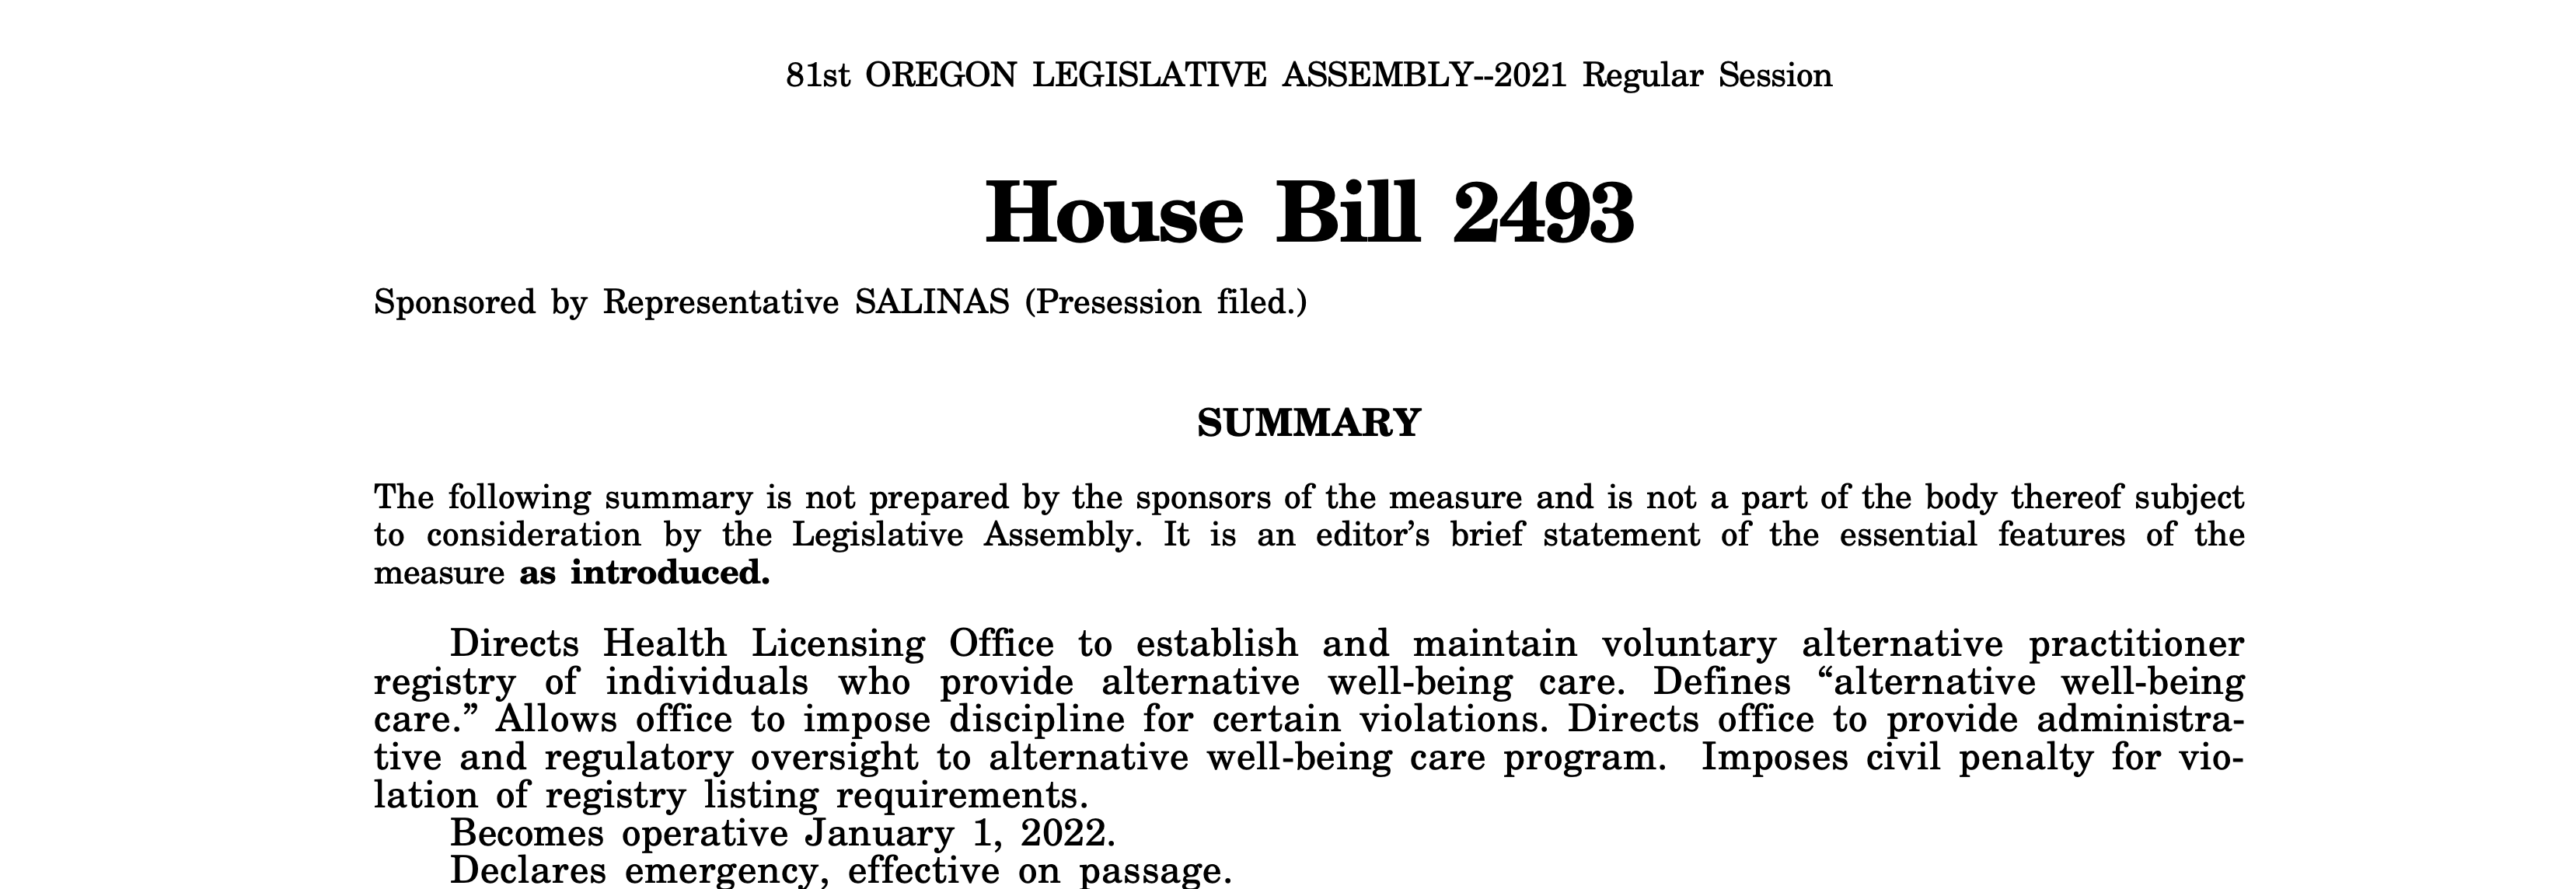 House Bill 2493